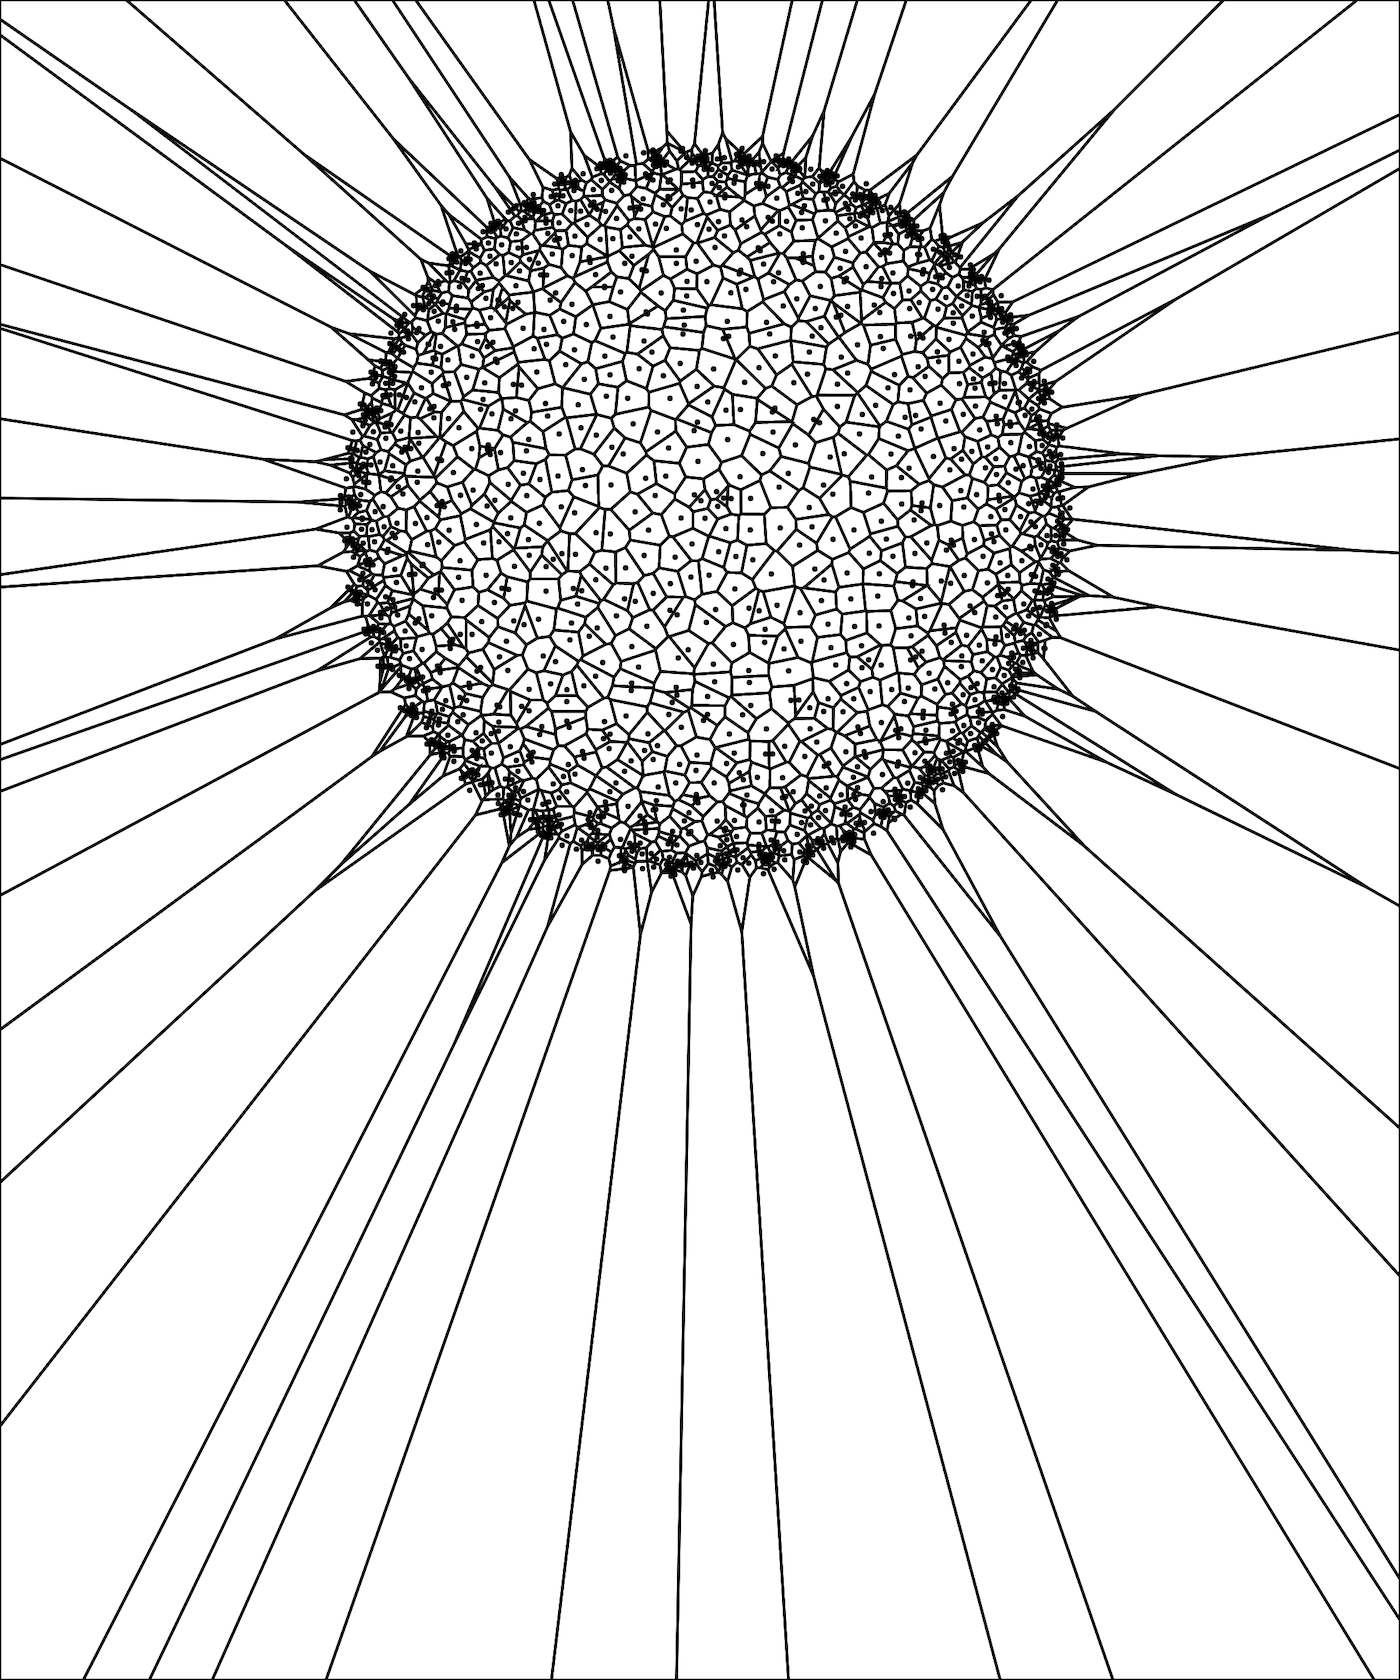 Voronoi diagram with points visible